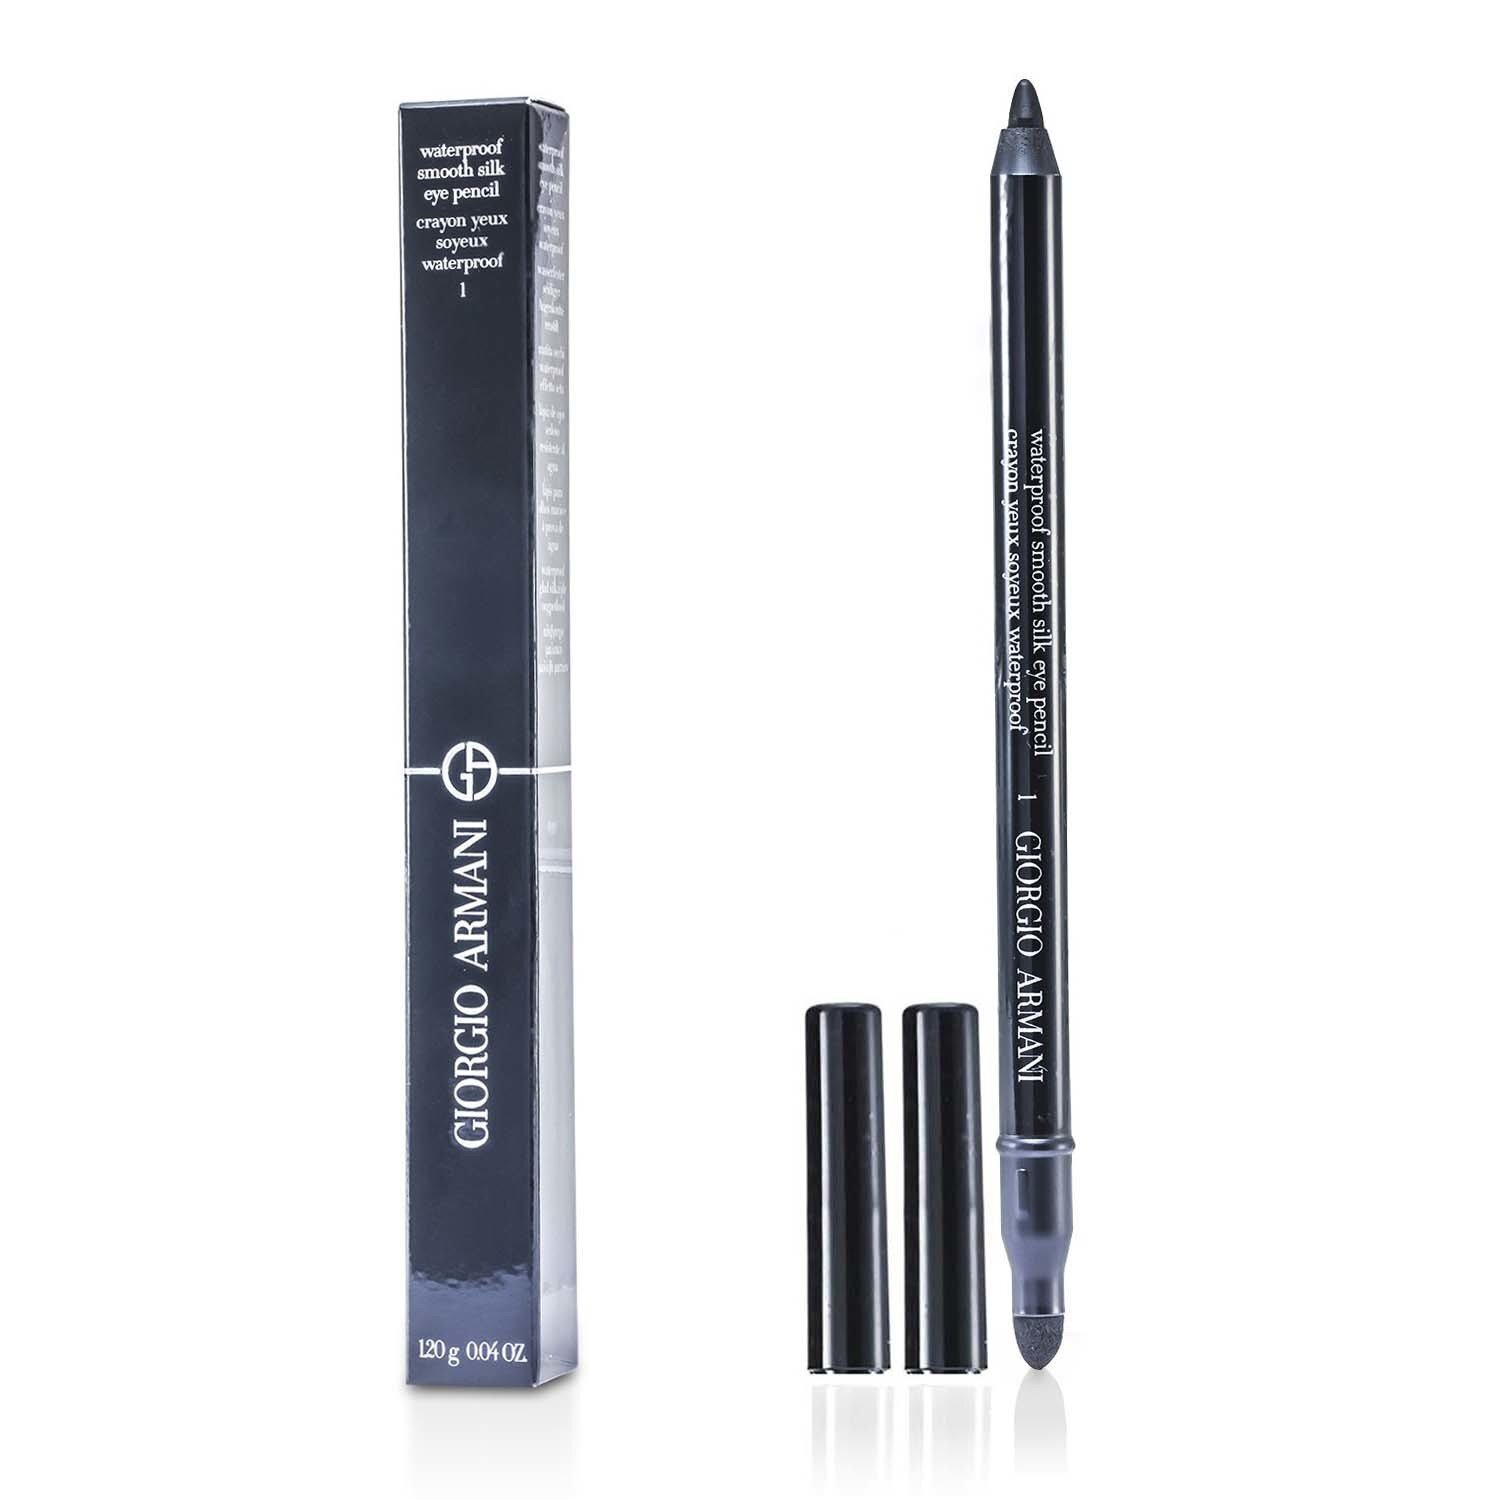 Giorgio Armani Waterproof Smooth Silk Eye Pencil 1.2g/0.04oz